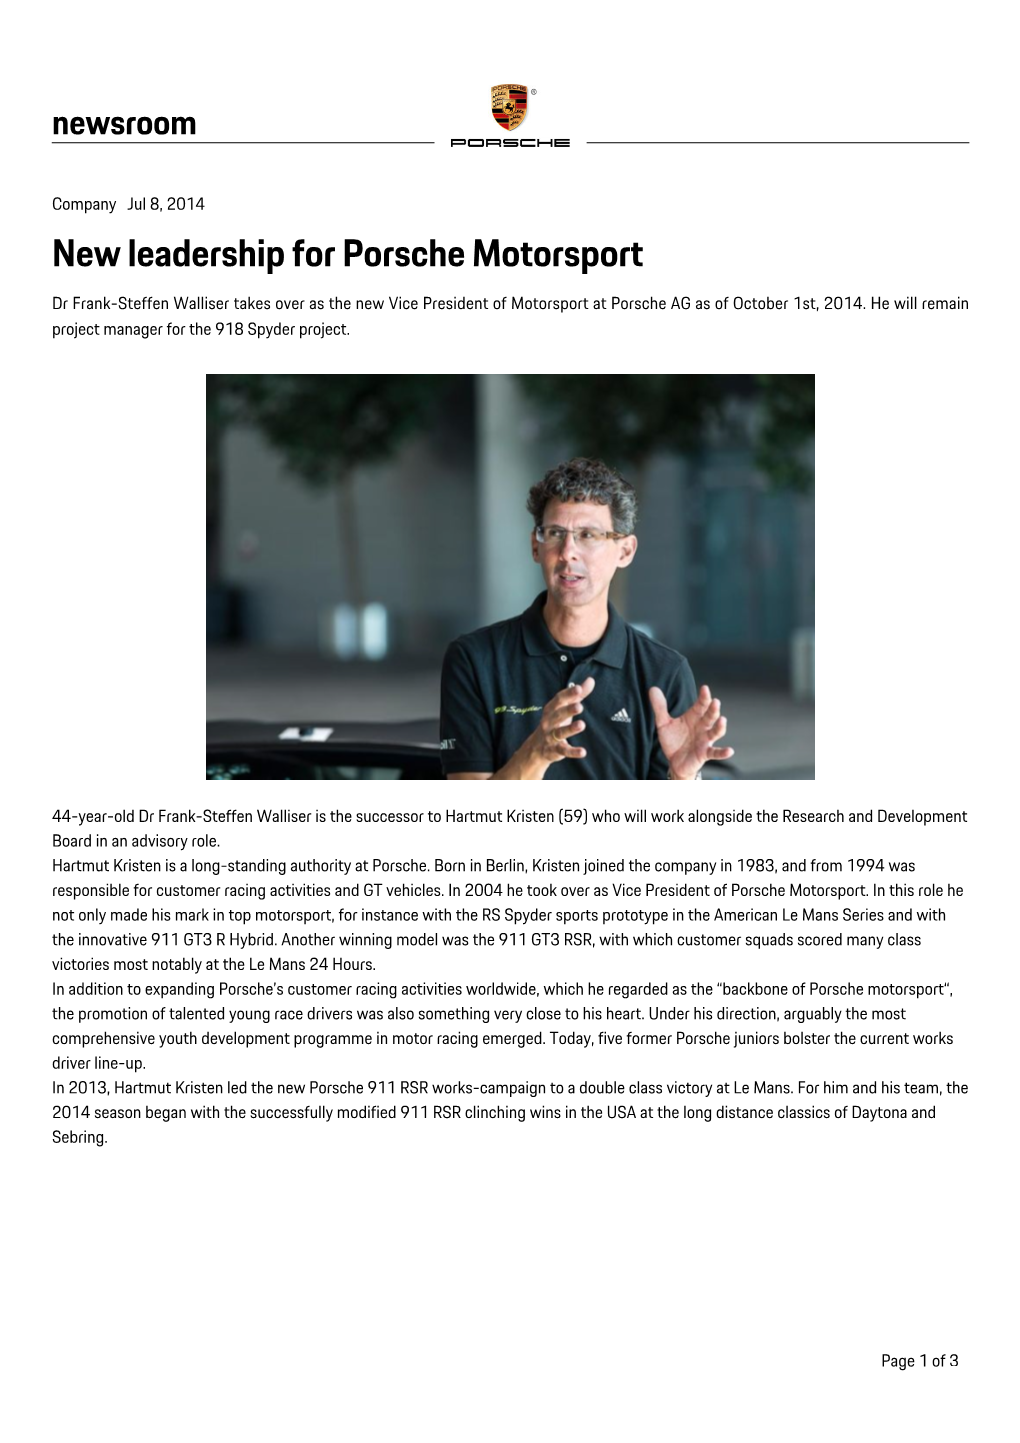 New Leadership for Porsche Motorsport Dr Frank-Steffen Walliser Takes Over As the New Vice President of Motorsport at Porsche AG As of October 1St, 2014